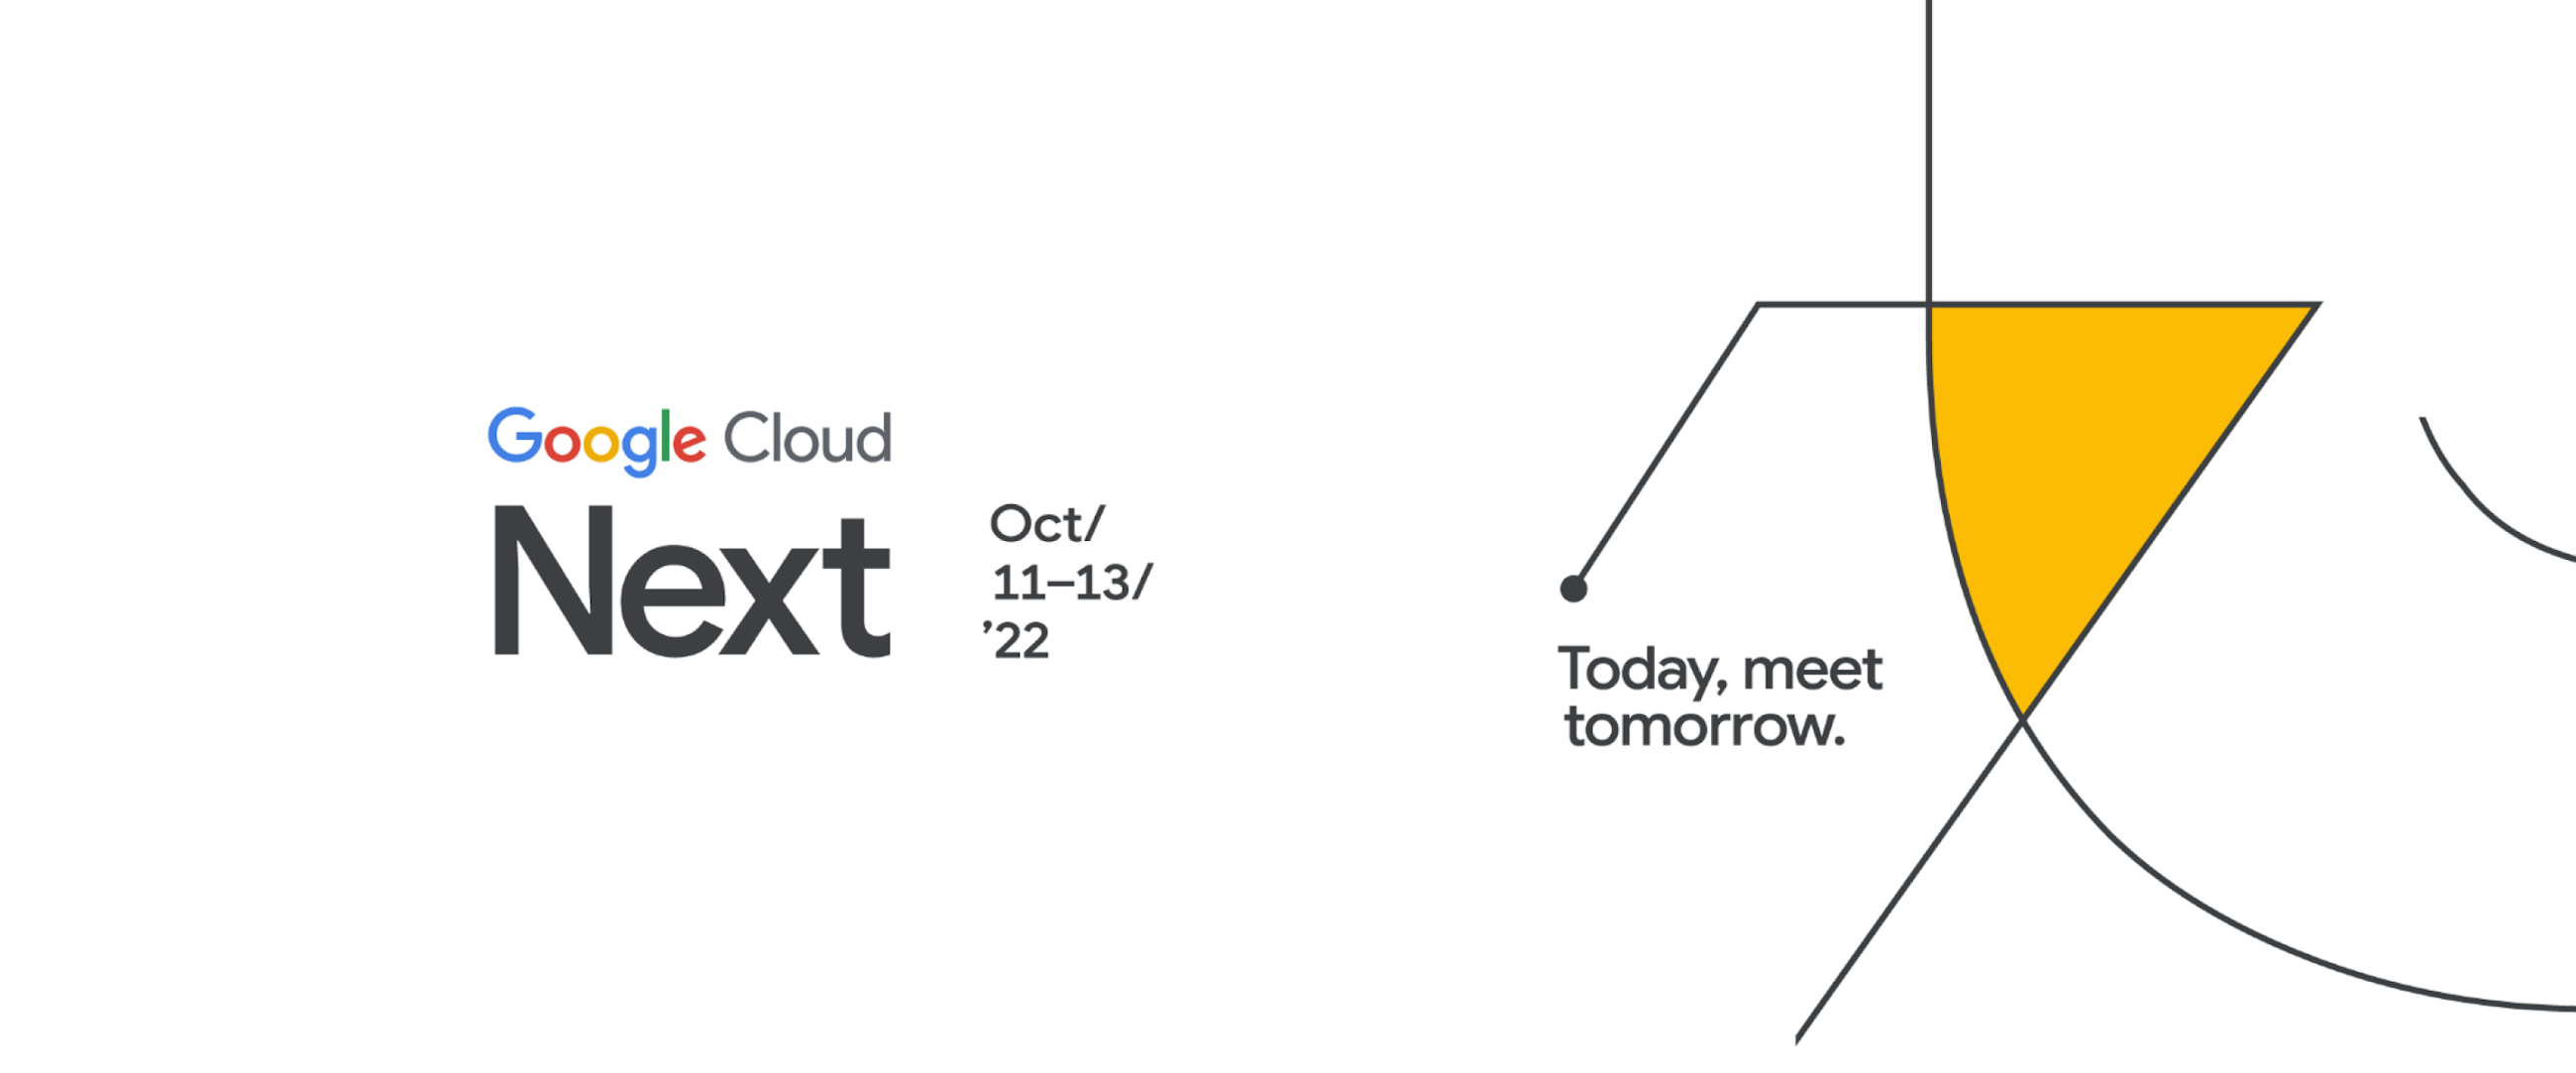 Register now for Google Cloud Next ’22 Google Cloud Blog